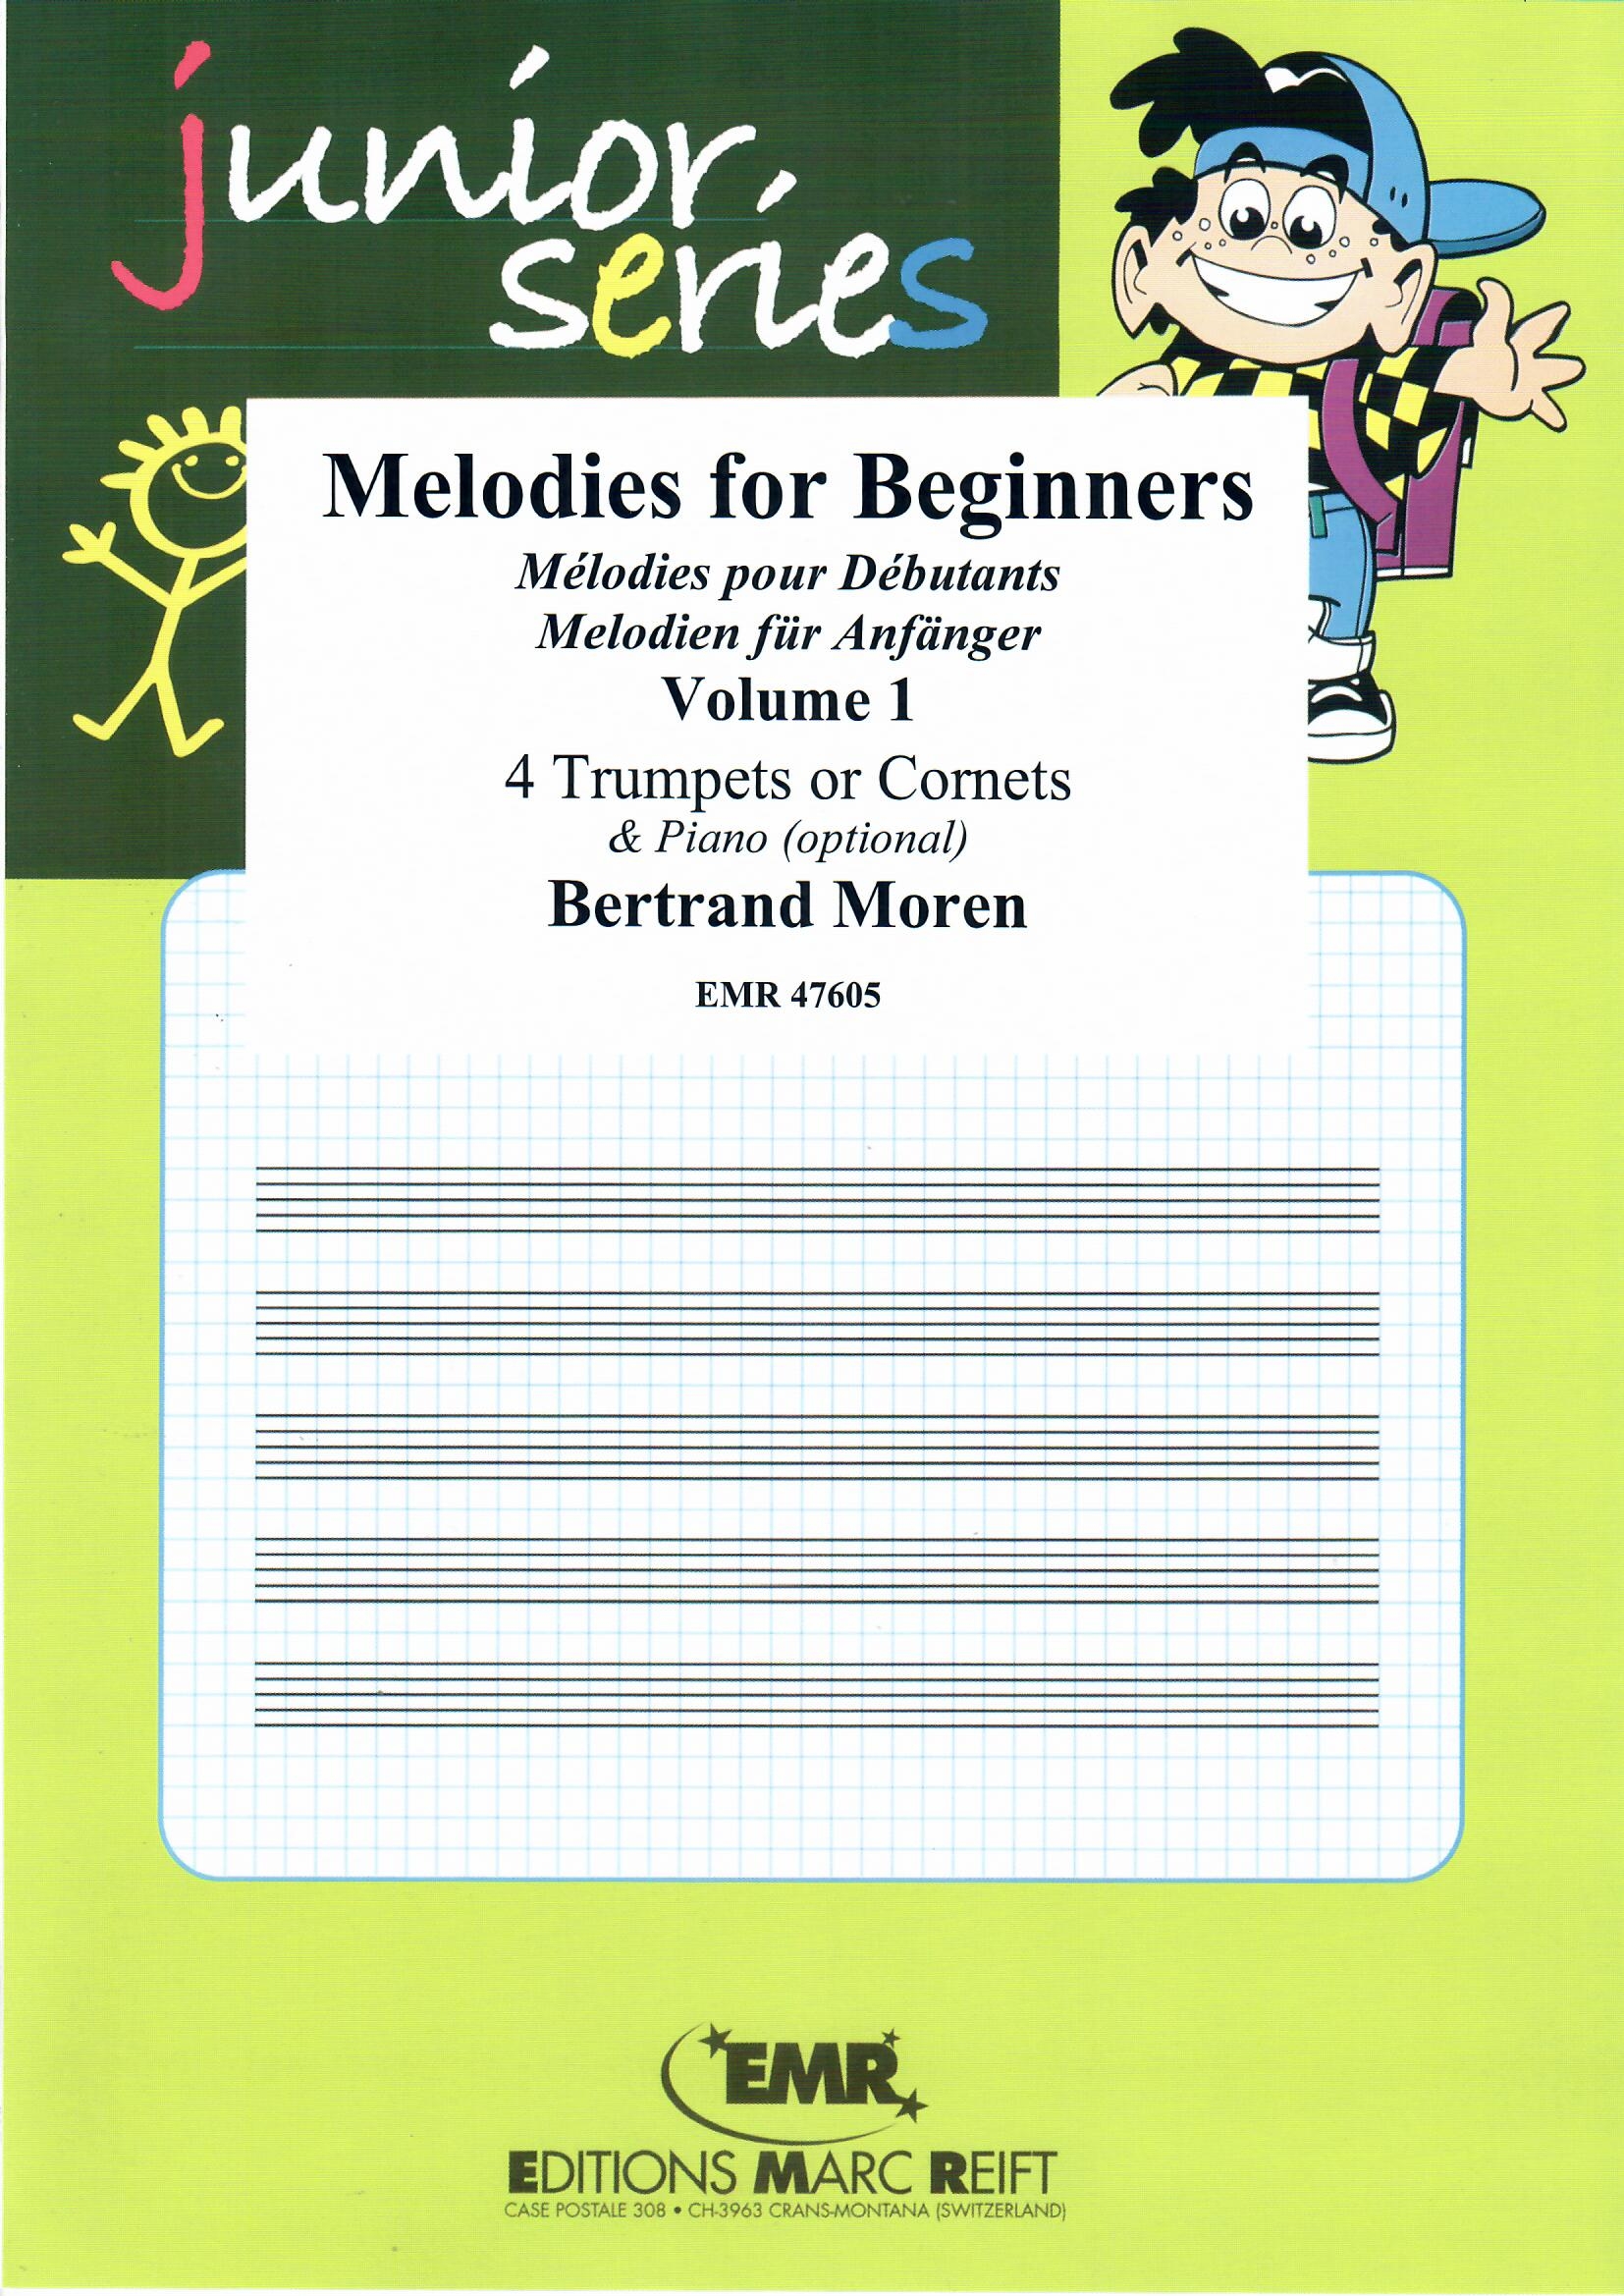 MELODIES FOR BEGINNERS VOLUME 1 - Trumpet Quartet